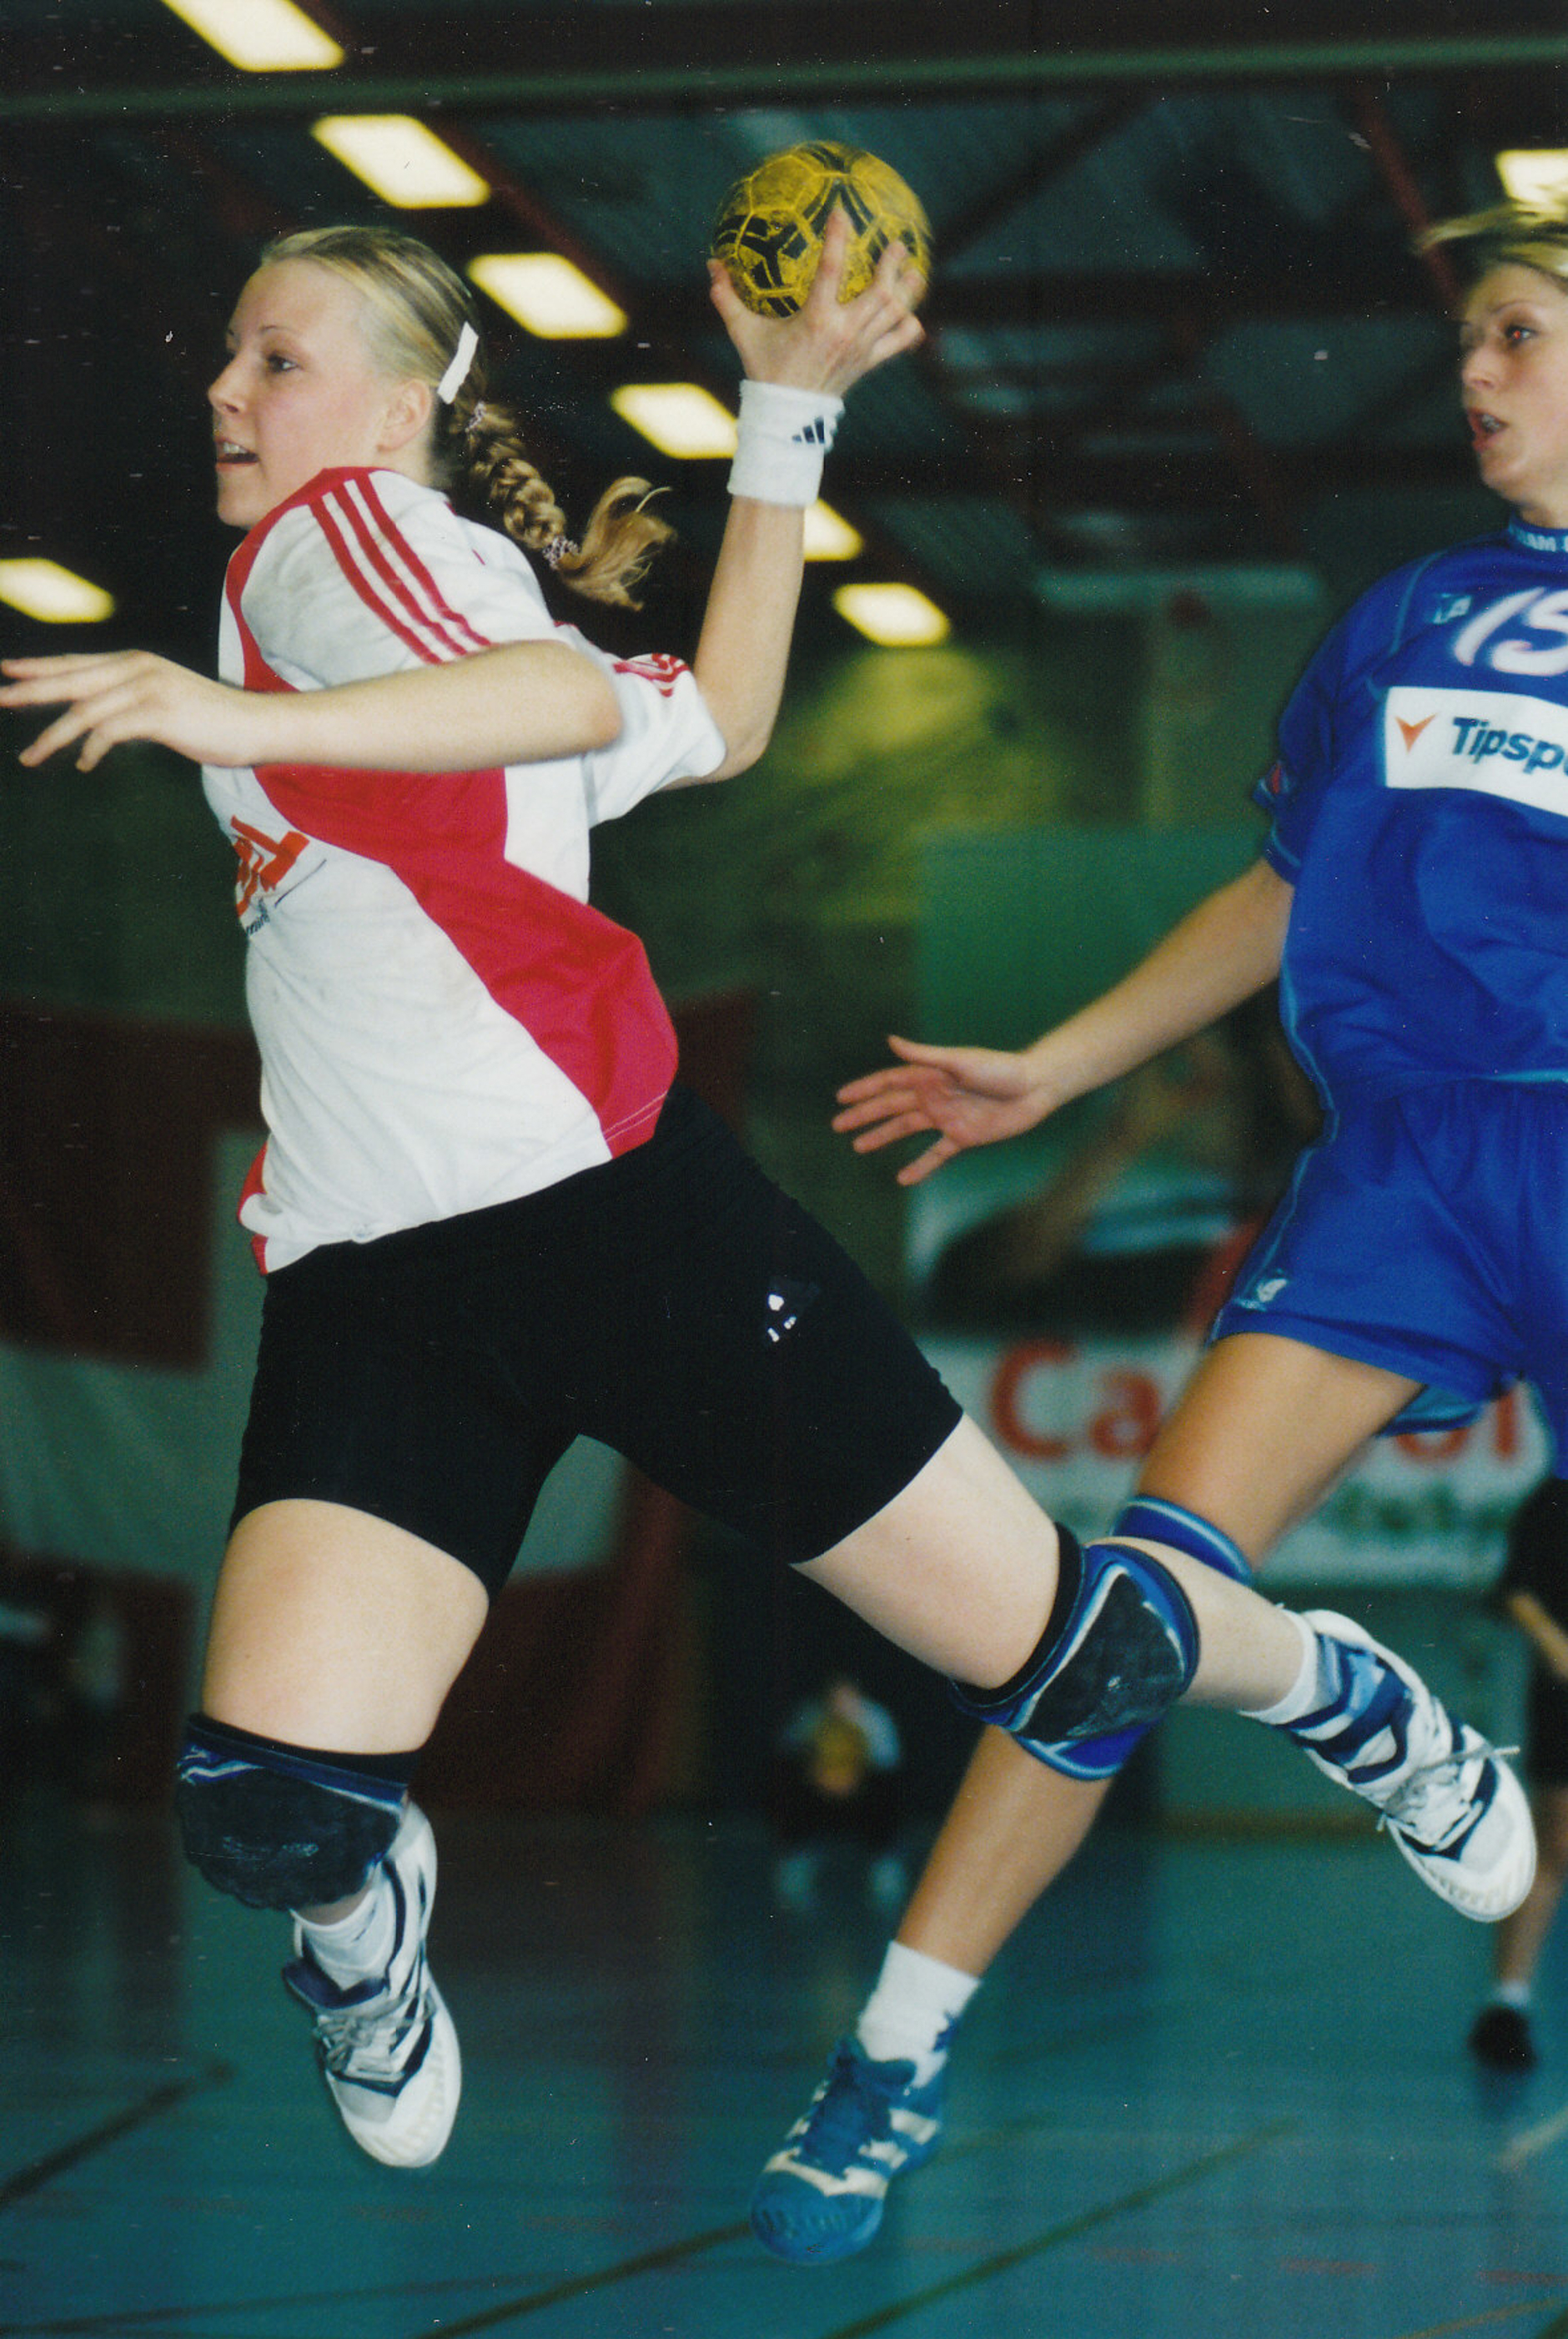 2003-04-19 Frauen Nati U20 SUI-CZE 23-28 Stans Eichli - Nicole Dinkel2.jpg